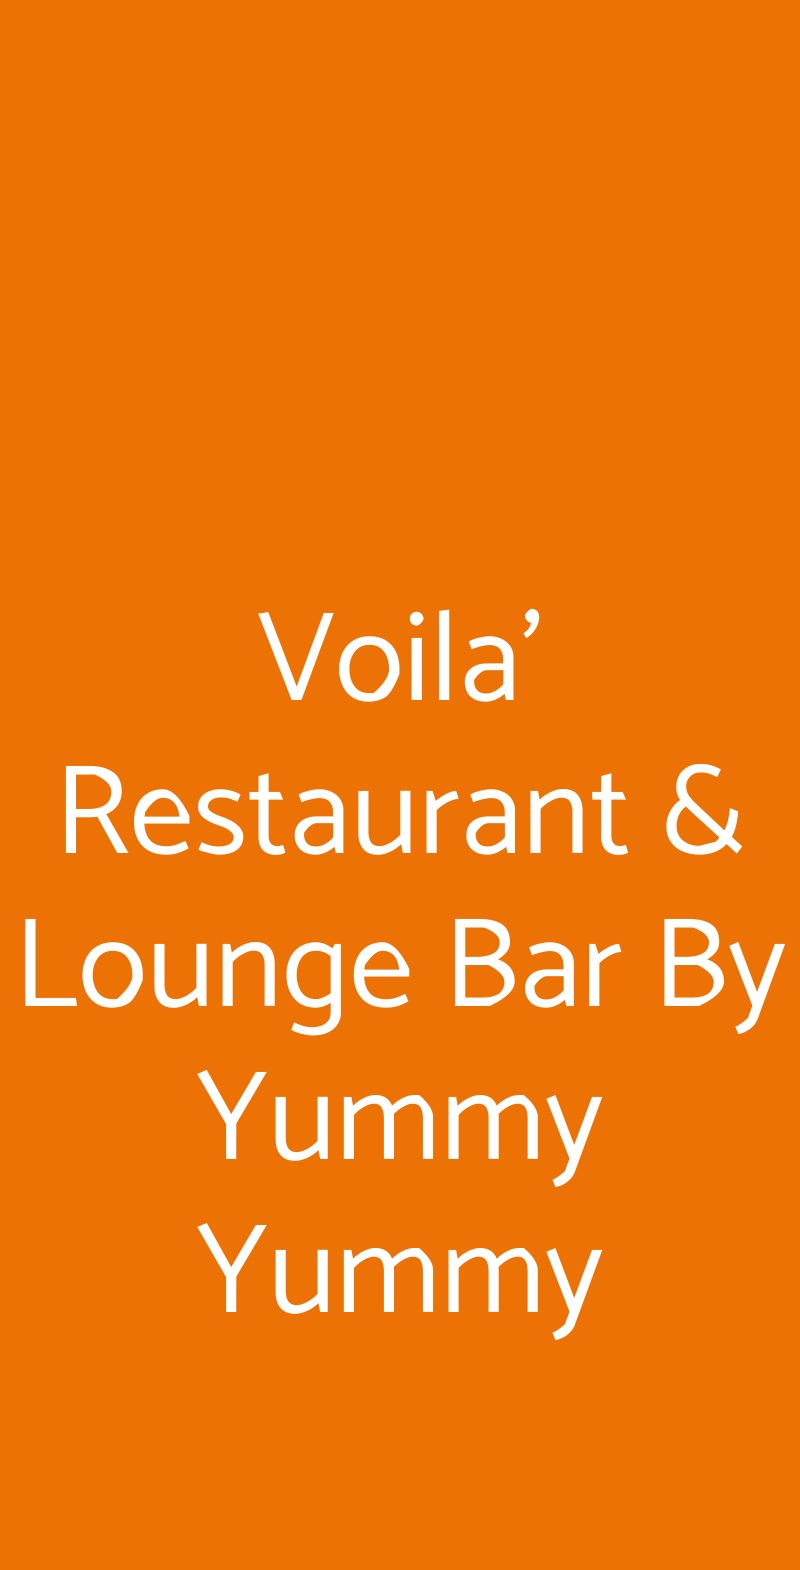 Voila' Restaurant & Lounge Bar By Yummy Yummy Firenze menù 1 pagina